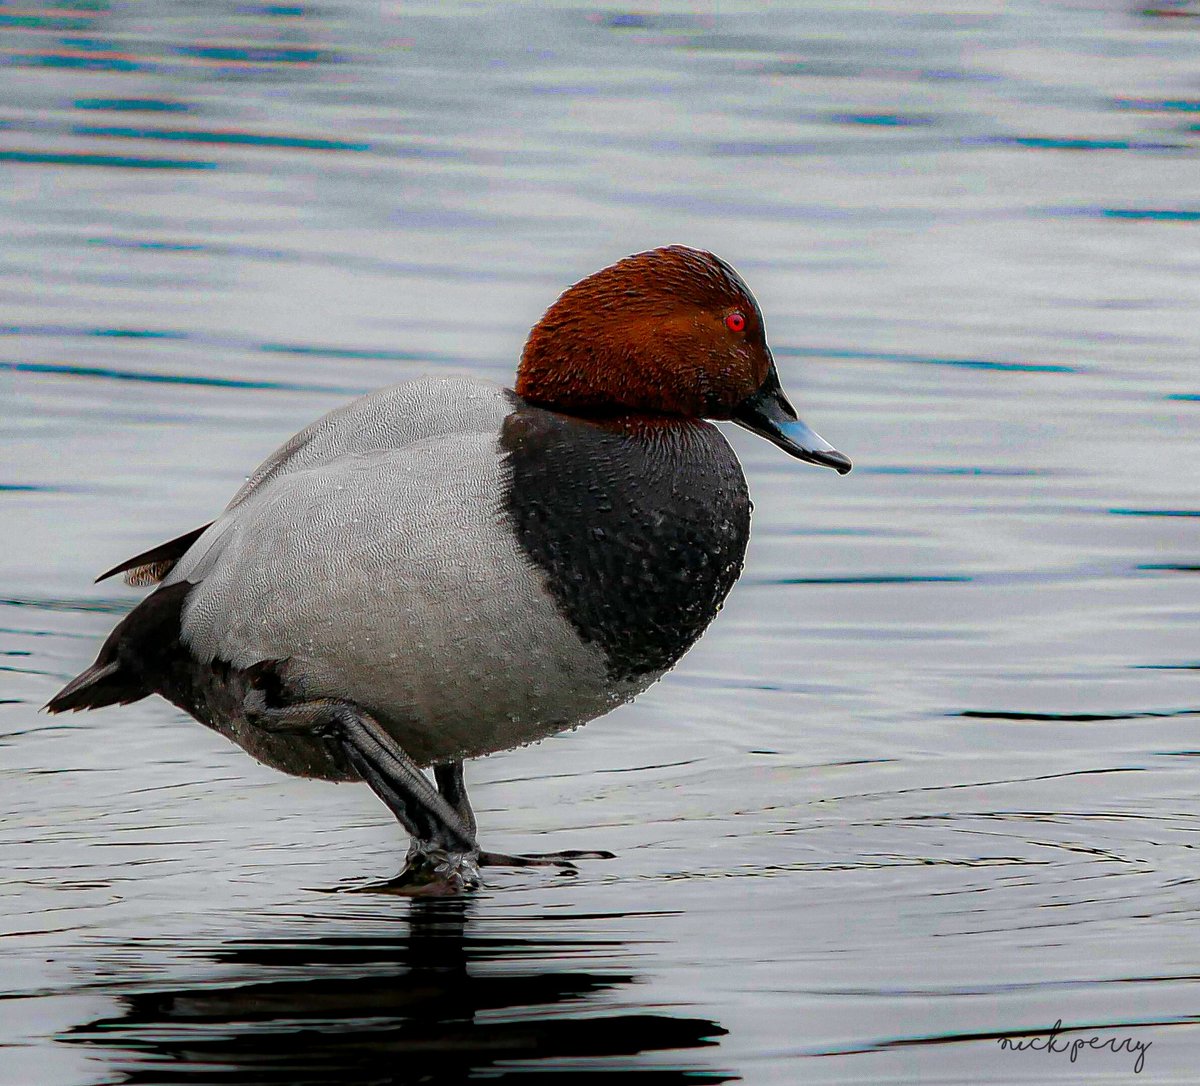 Common Pochard 16/3/2024
Cosmeston lakes 🏴󠁧󠁢󠁷󠁬󠁳󠁿
#TwitterNatureCommunity 
#TwitterNaturePhotography 
#BirdsOfTwitter #birding
#birdwatching #UKwildlife
#NatureBeauty 
#NatureTherapy